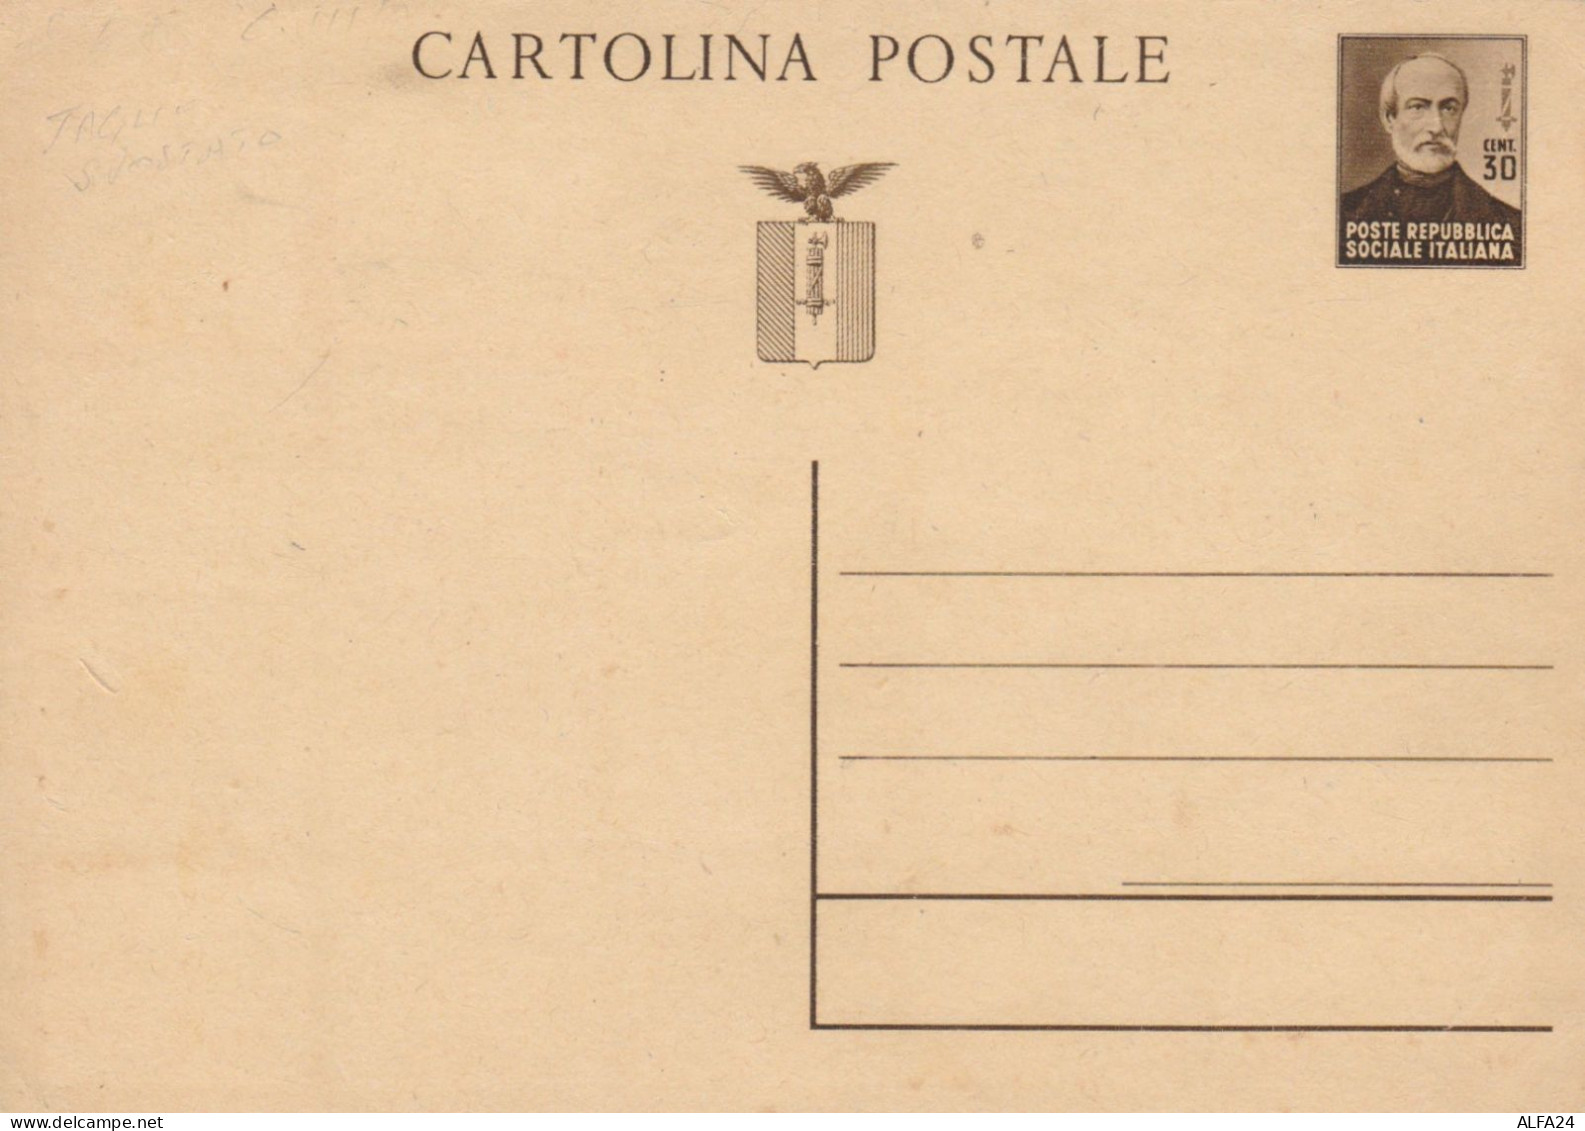 INTERO POSTALE C.30 RSI MAZZINI 1944-CAT.LASER 108 (HC96 - Interi Postali